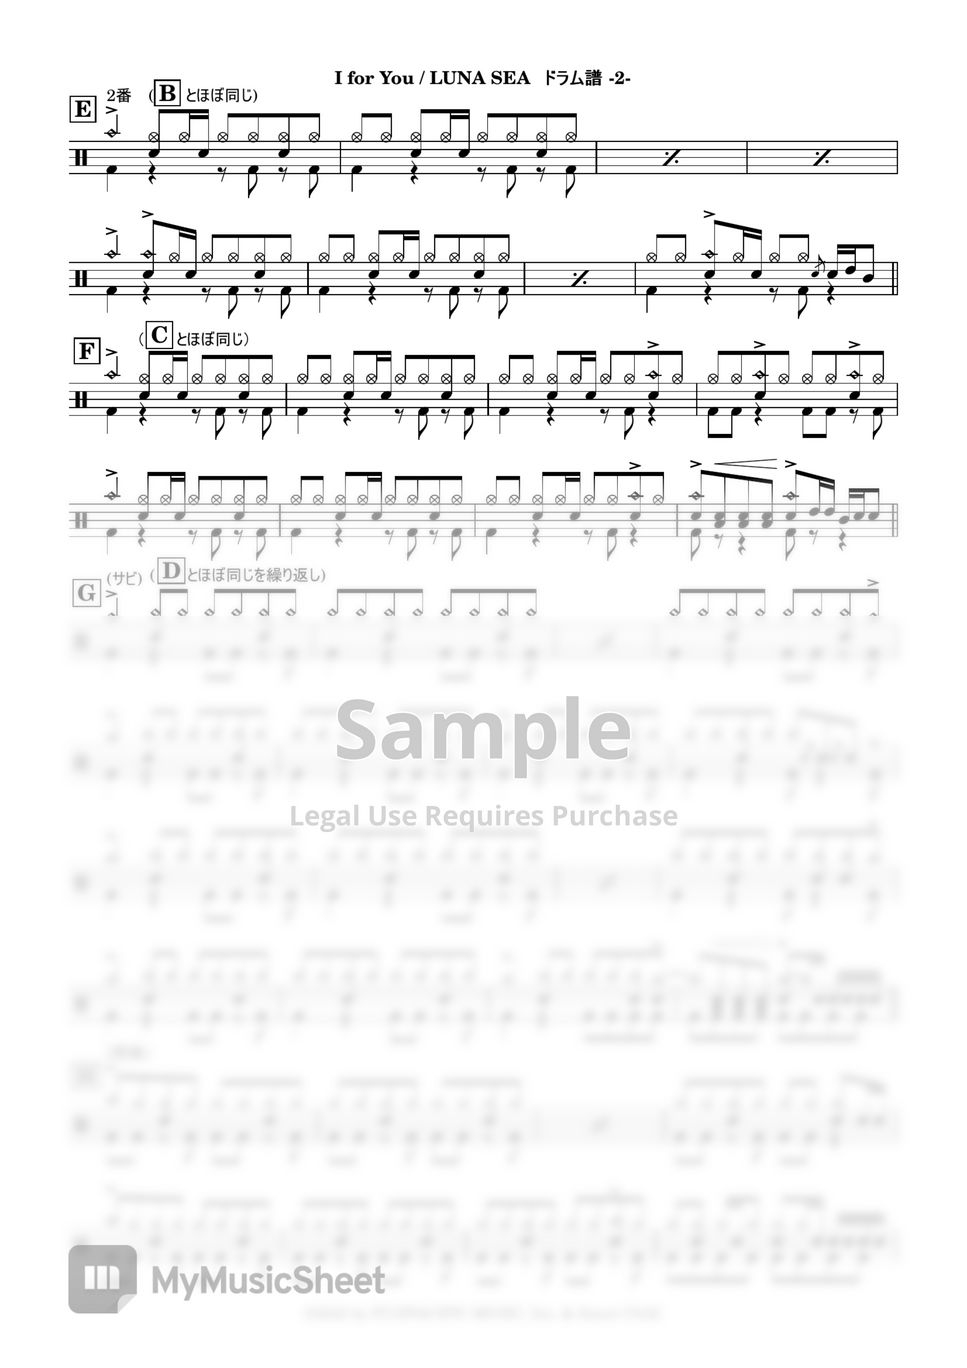 LUNA SEA - I for You (Drums Score & midi) by Kensaku Suzuki